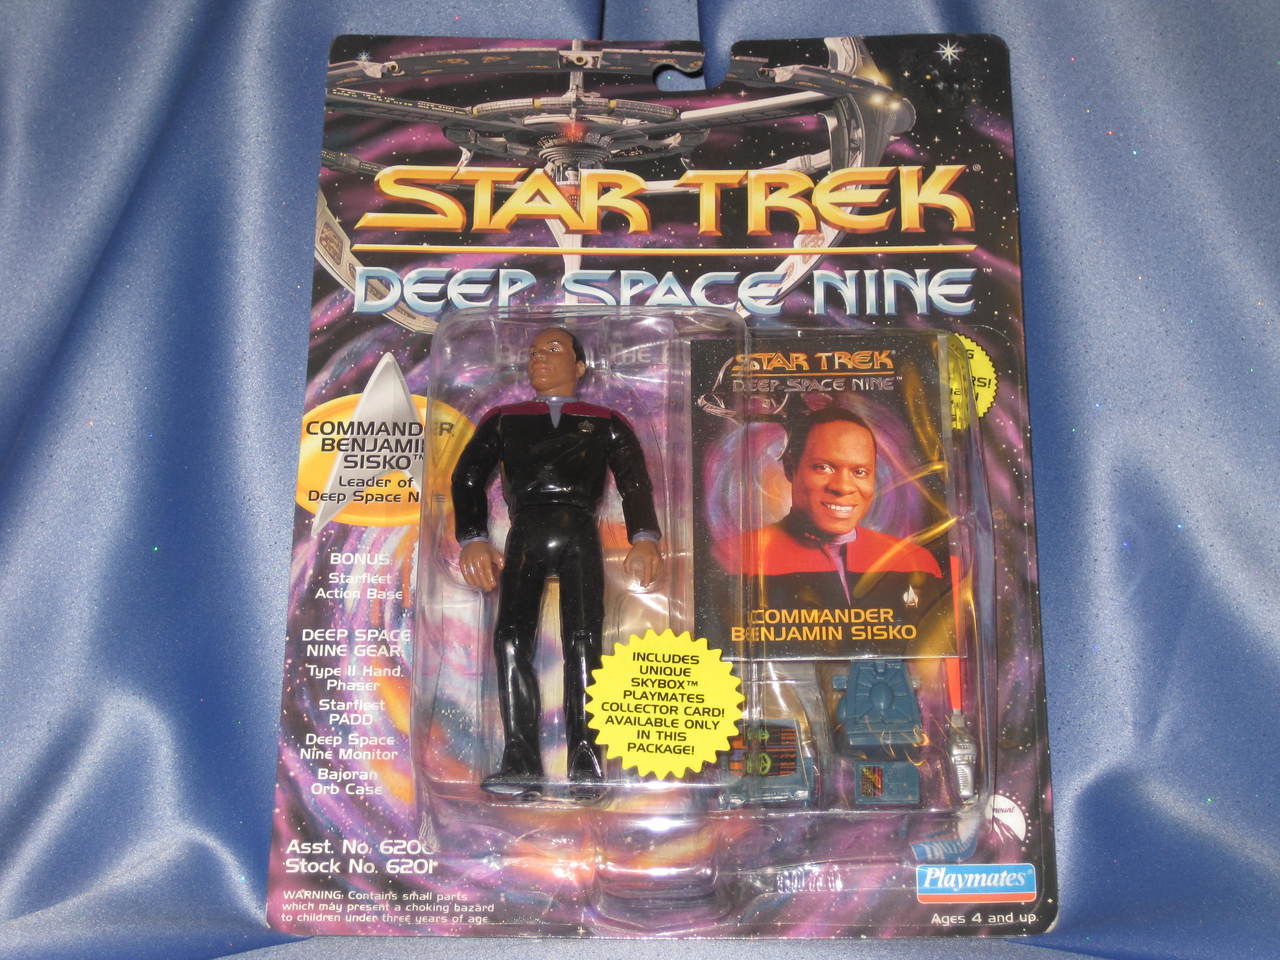 Primary image for Star Trek - Deep Space Nine - Commander Benjamin Sisko.